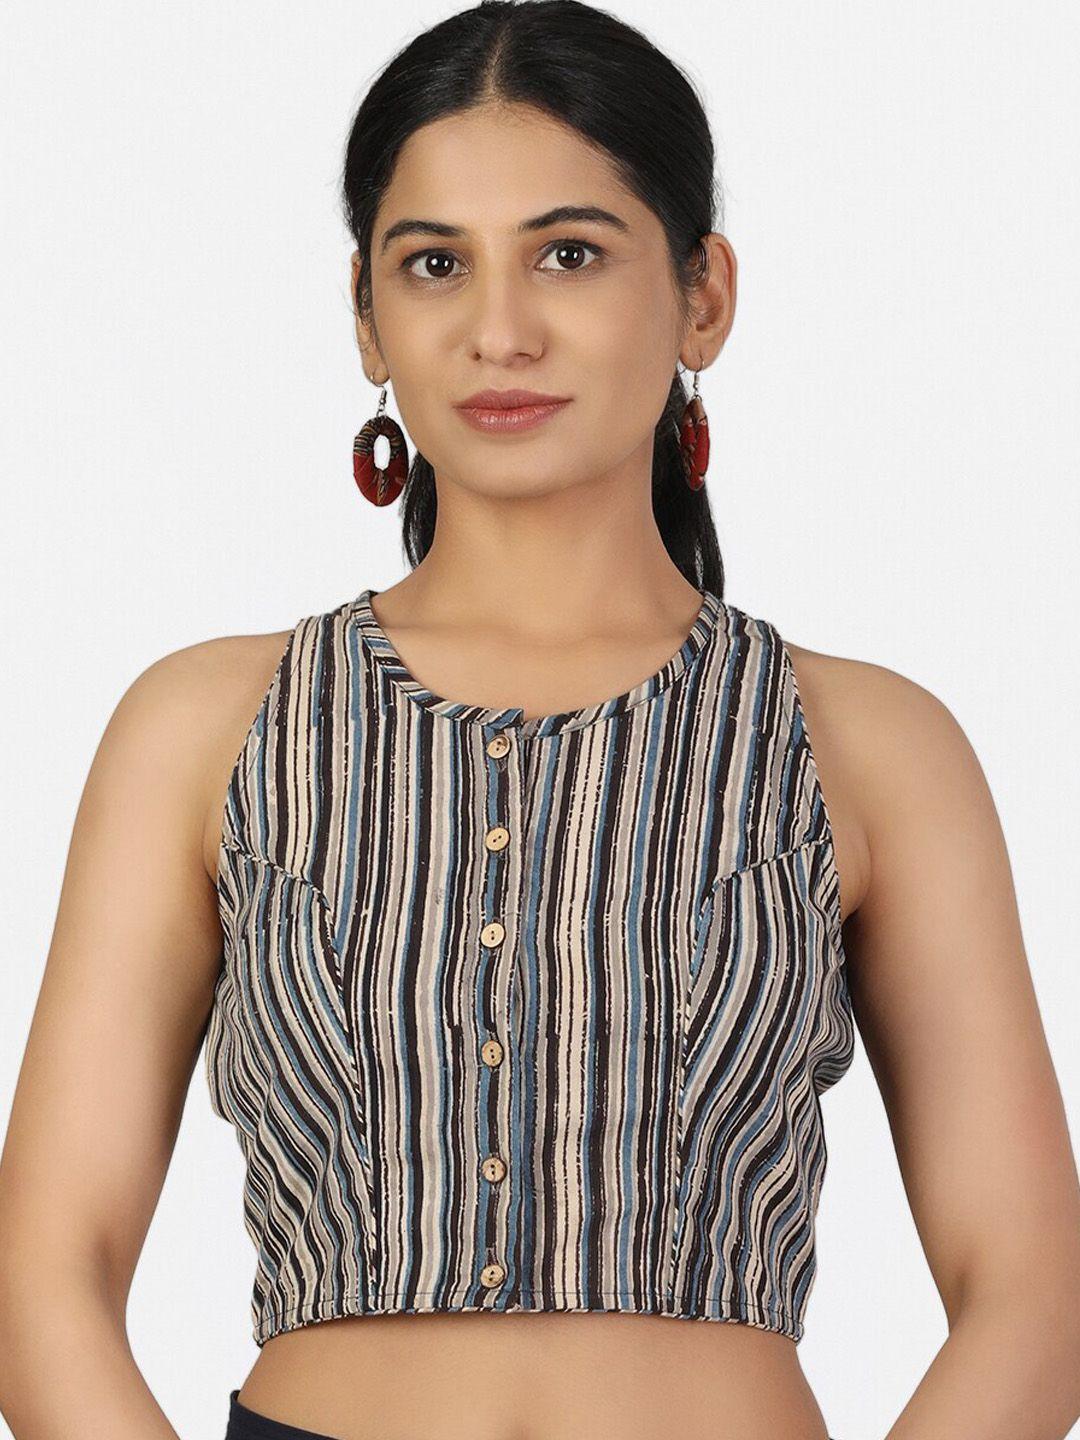 llajja grey melange & blue striped pure cotton saree blouse